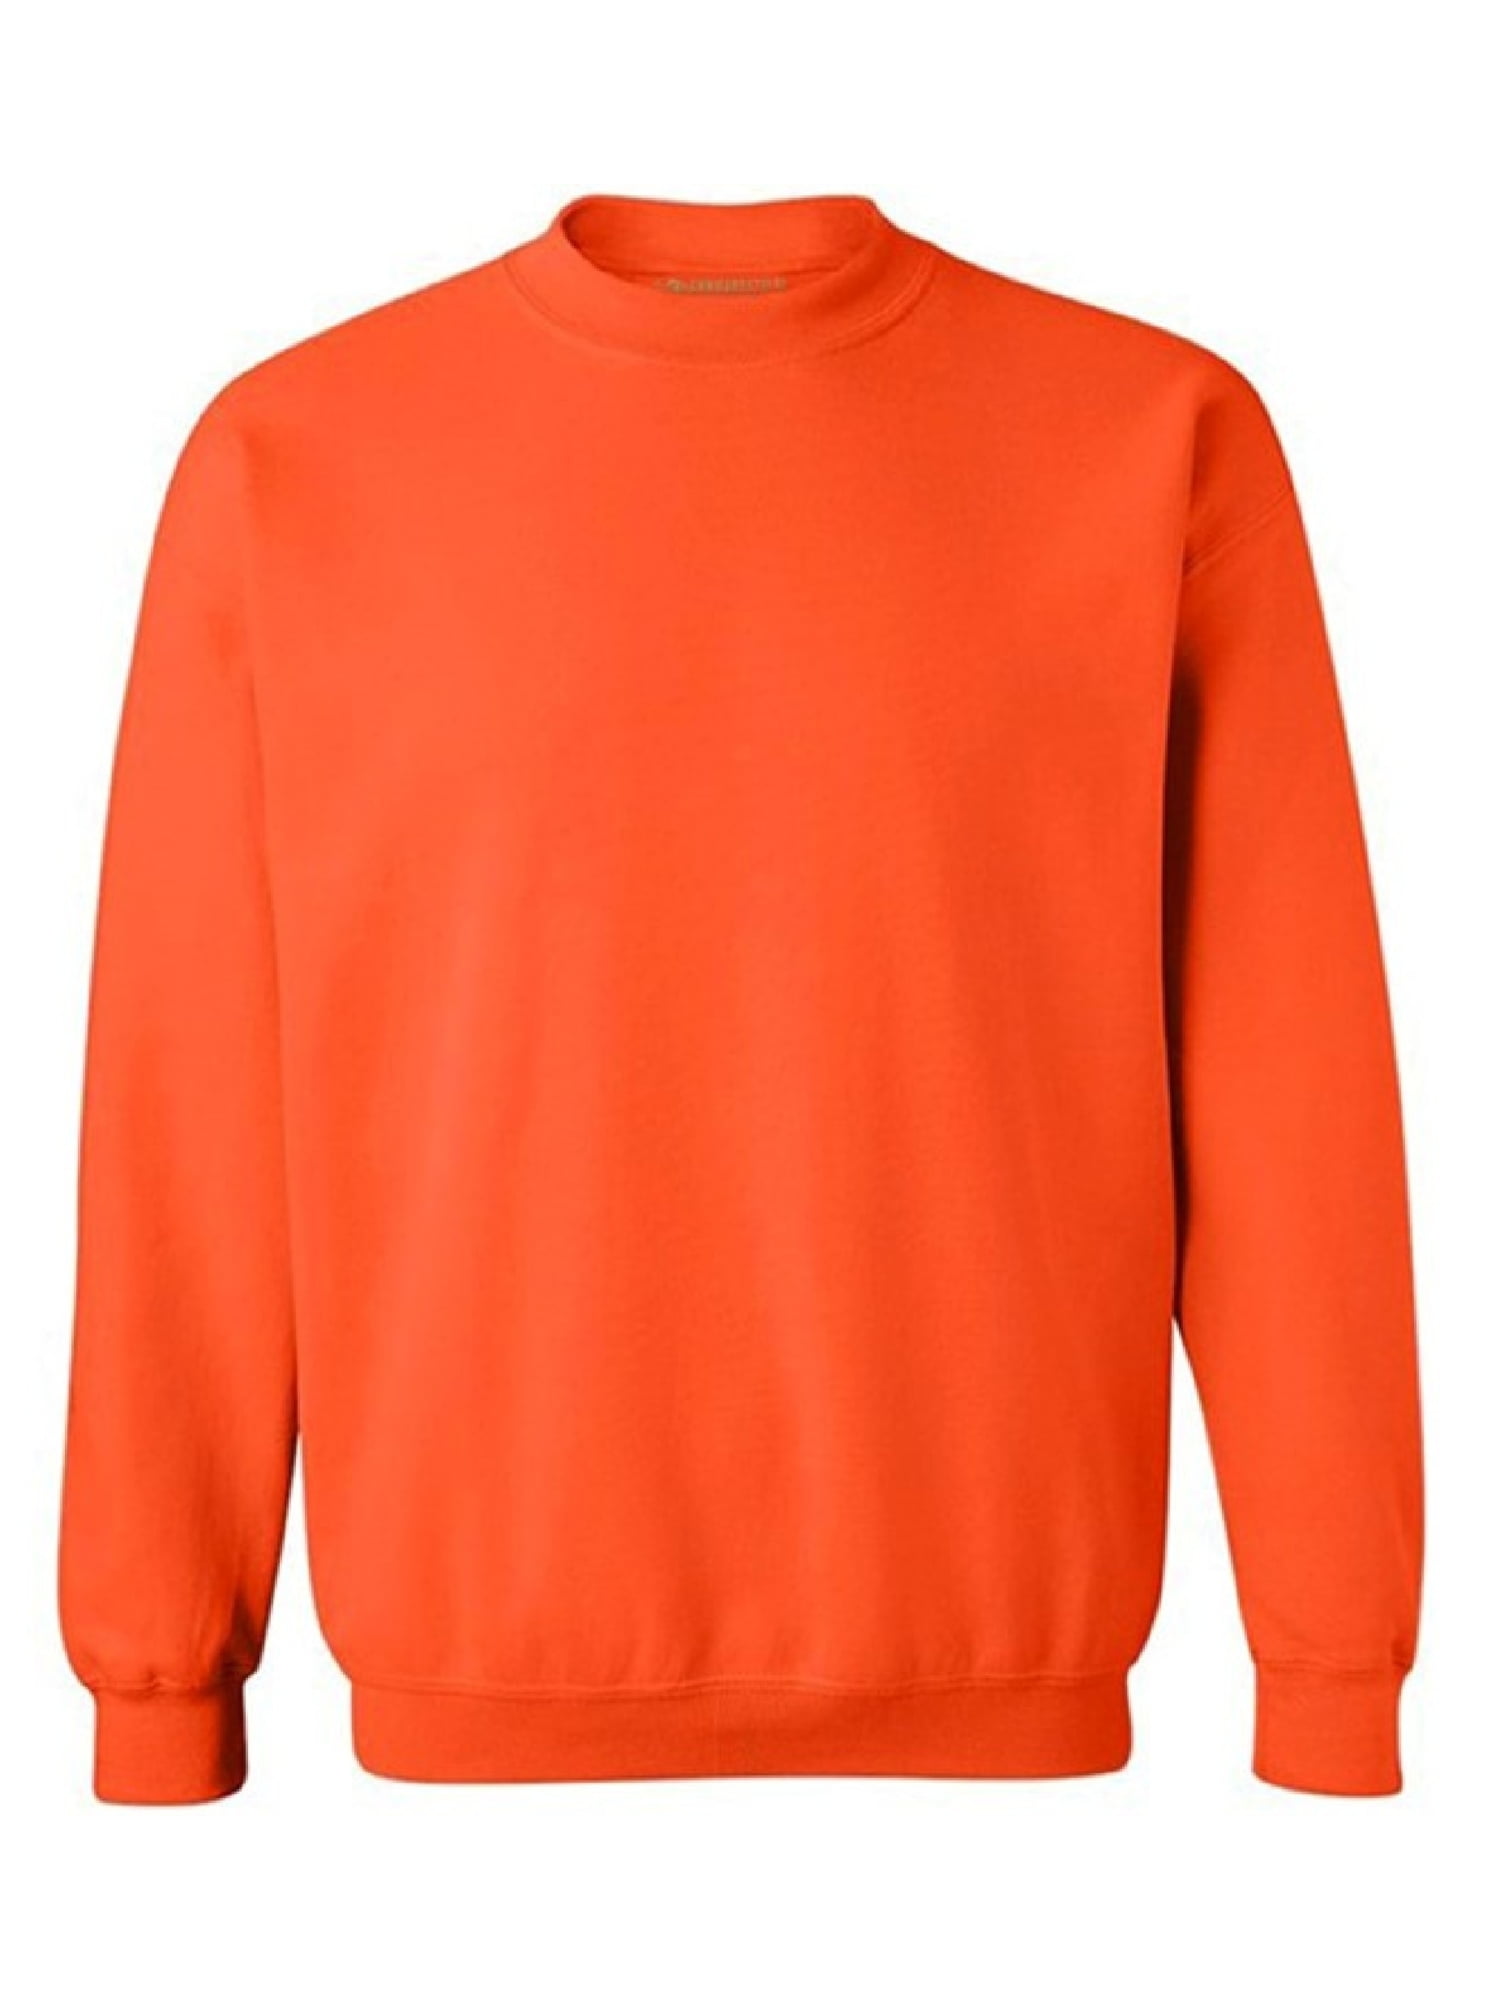 Orange Sweatshirt Orange Sweater Orange Hoodie for Thanksgiving Halloween  Orange Outfit for Men Women Adult Orange Clothing S M L XL 2XL Plus Size